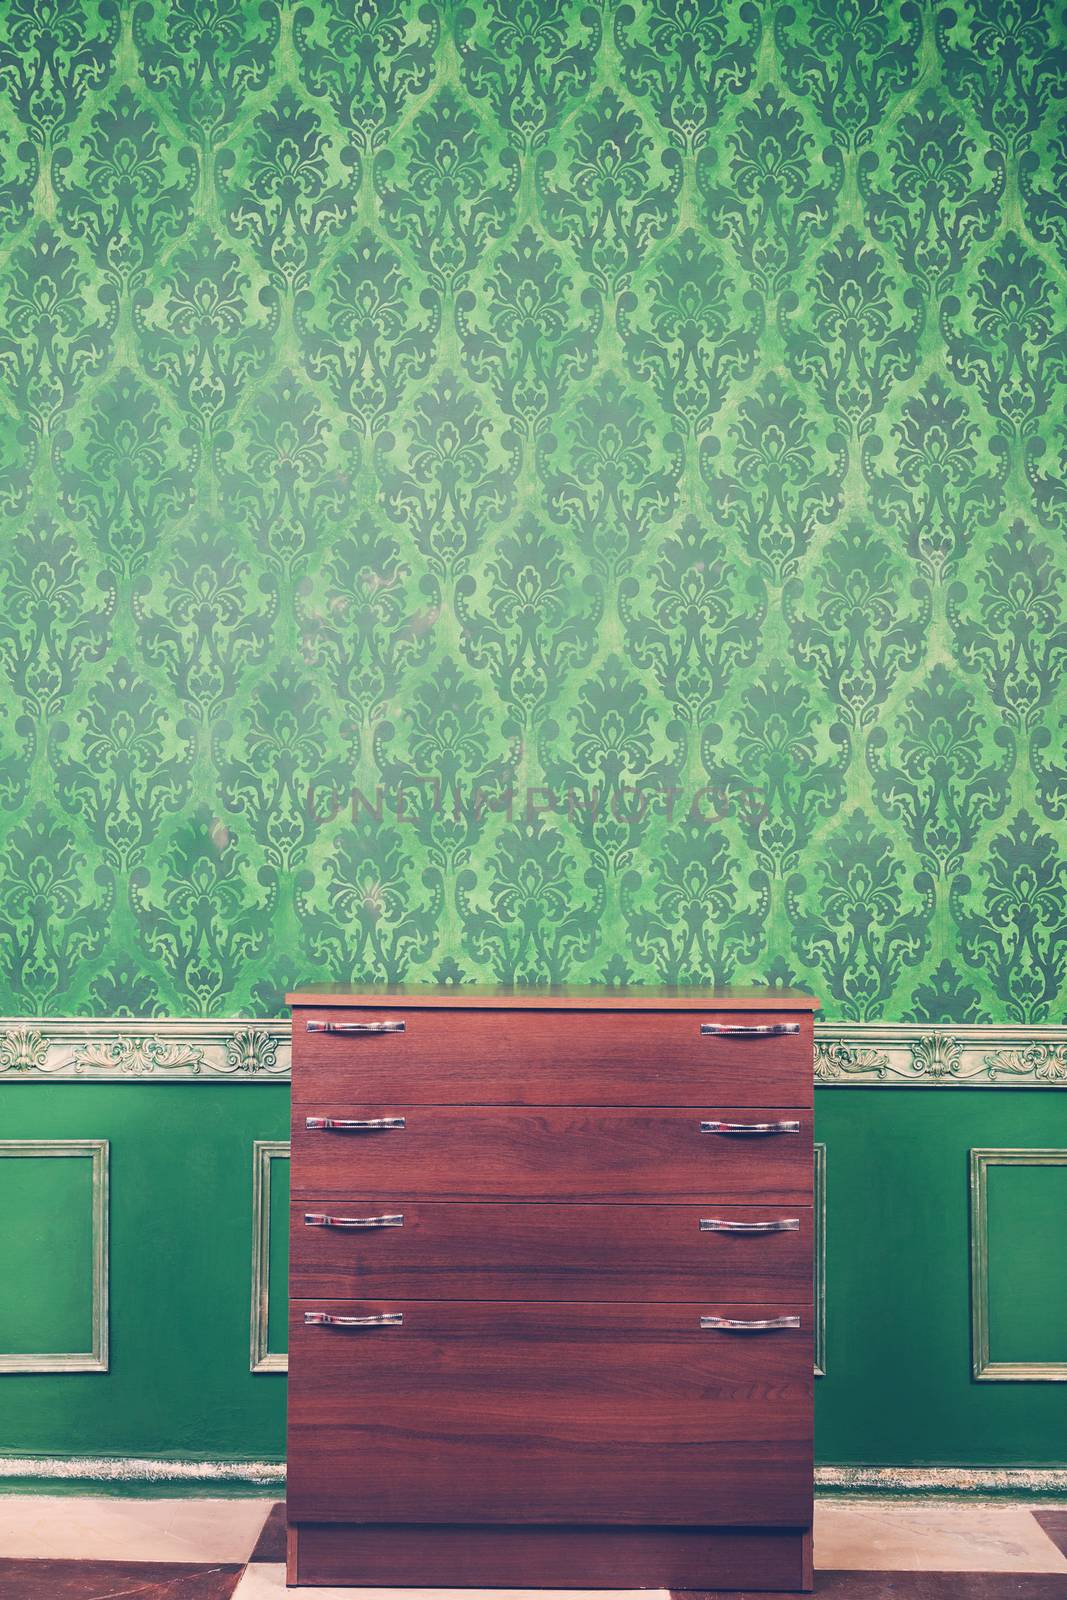 Luxury vintage interior with rococo pattern background by DCStudio